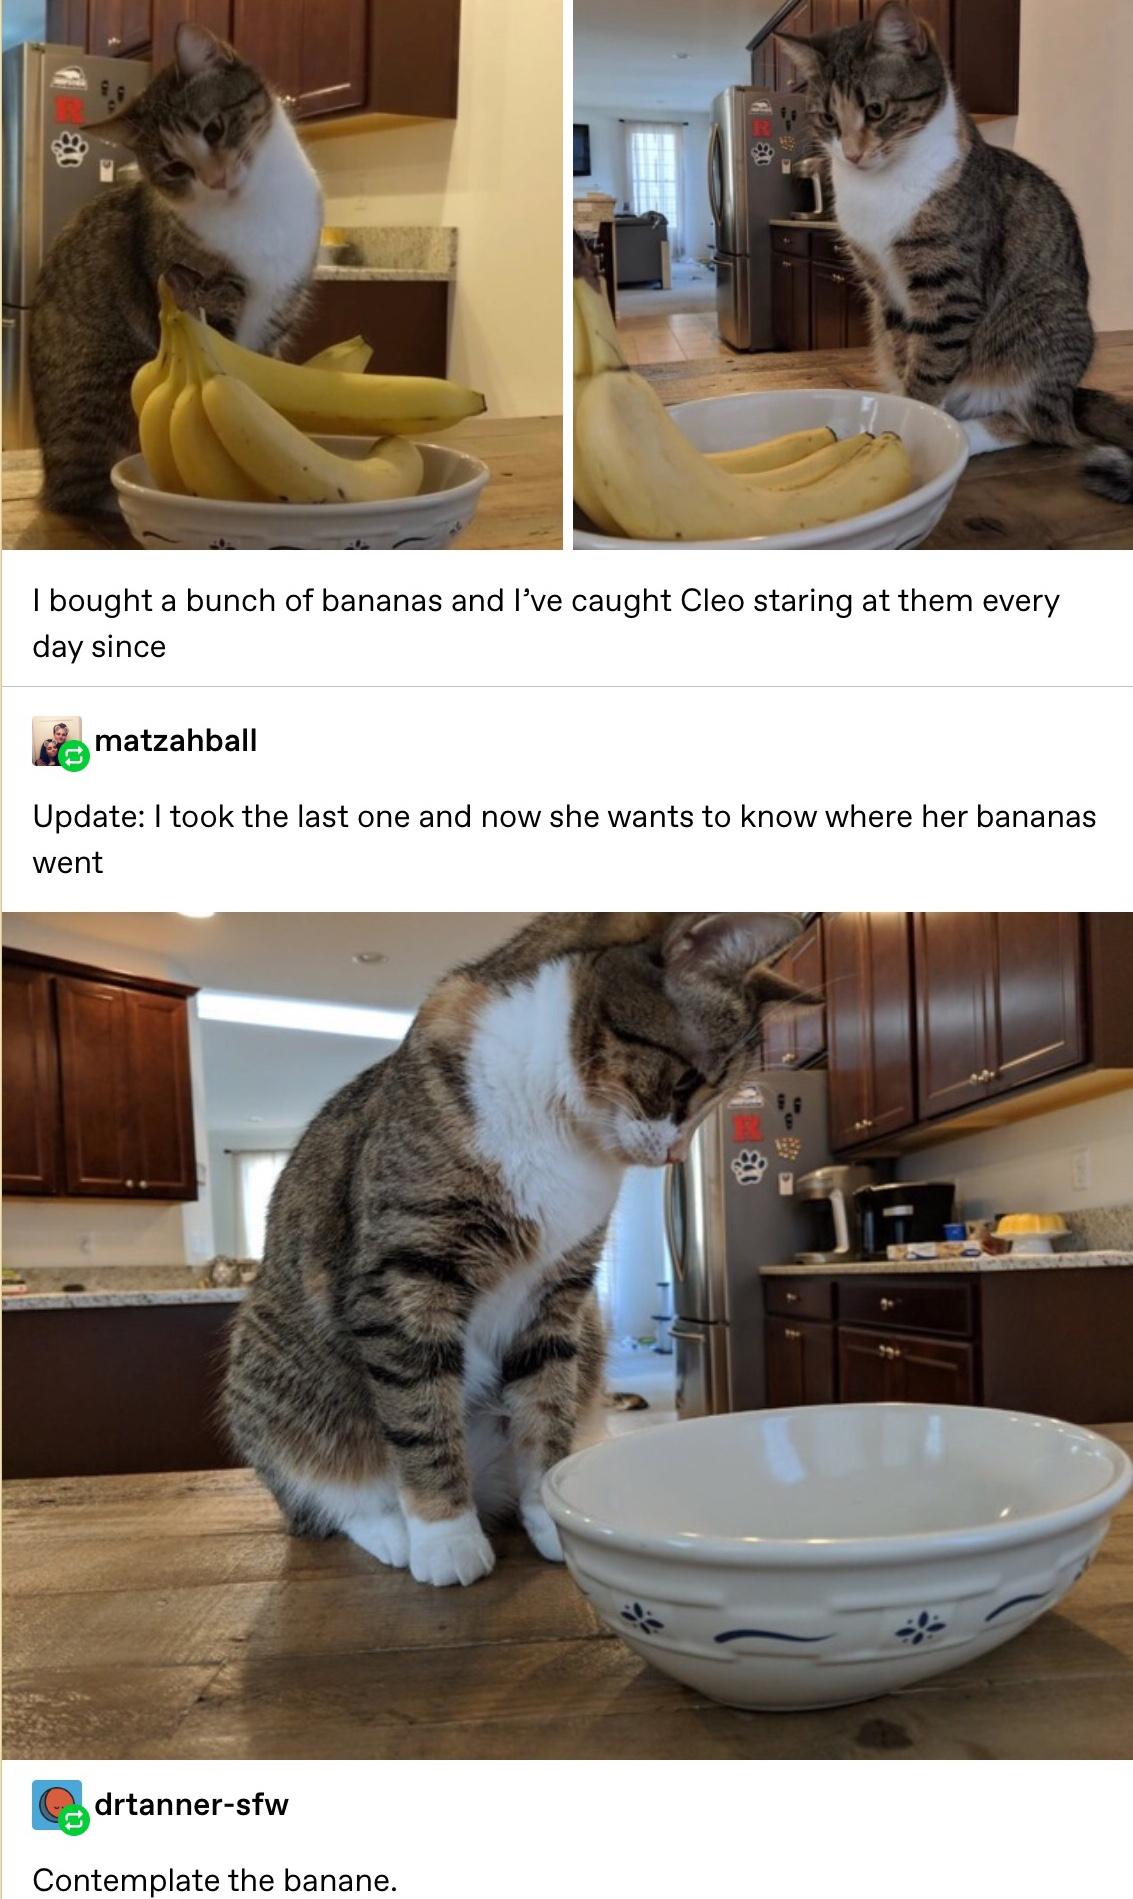 Where is bananas?